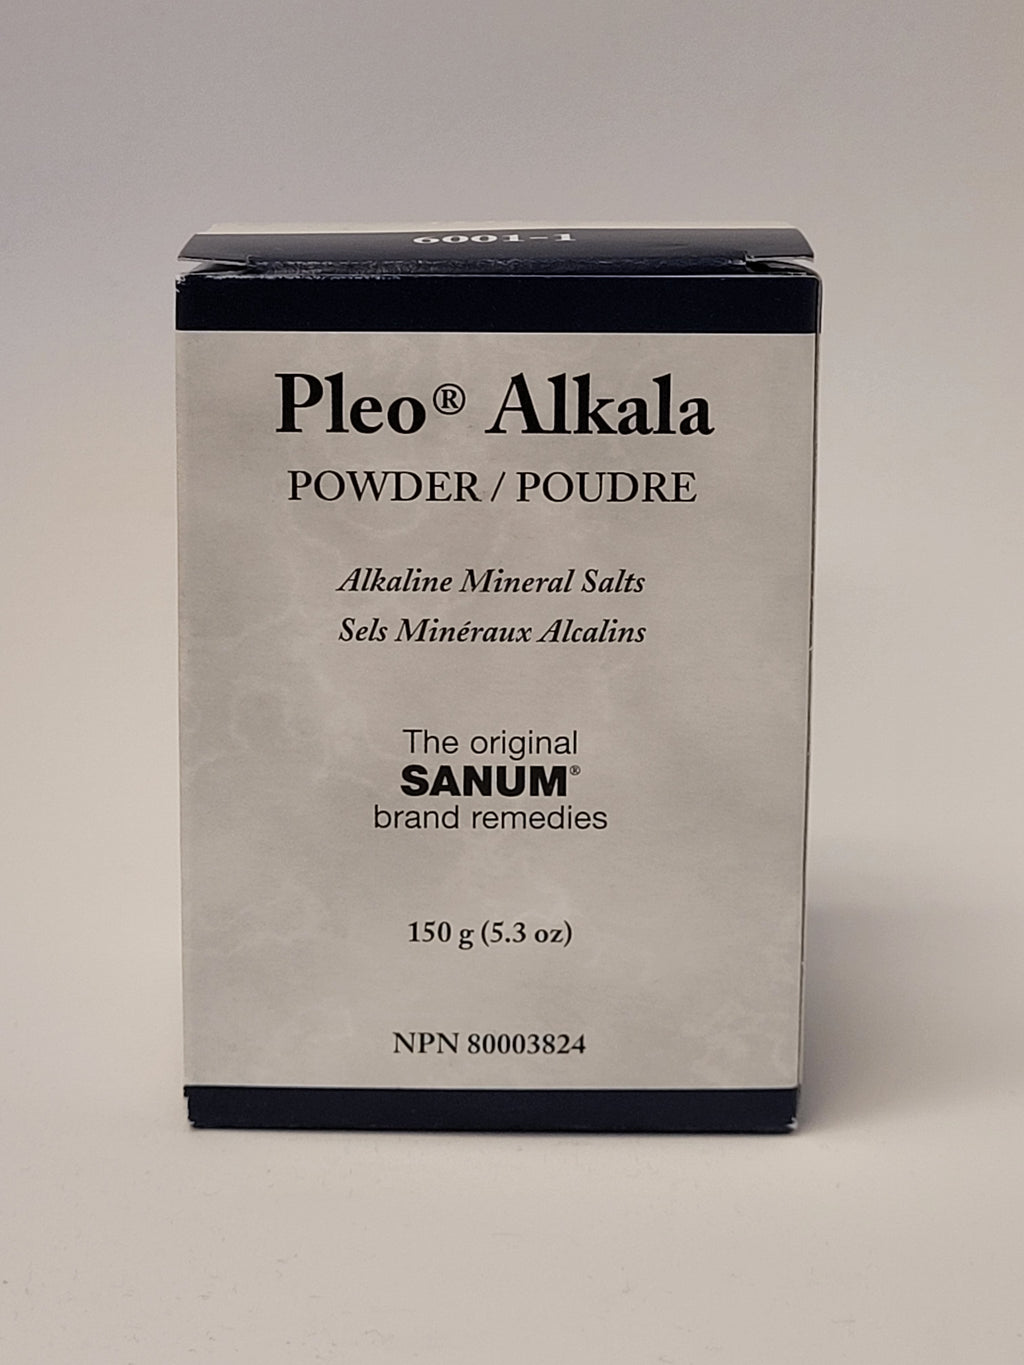 Pleo Alkala Antacid Powder